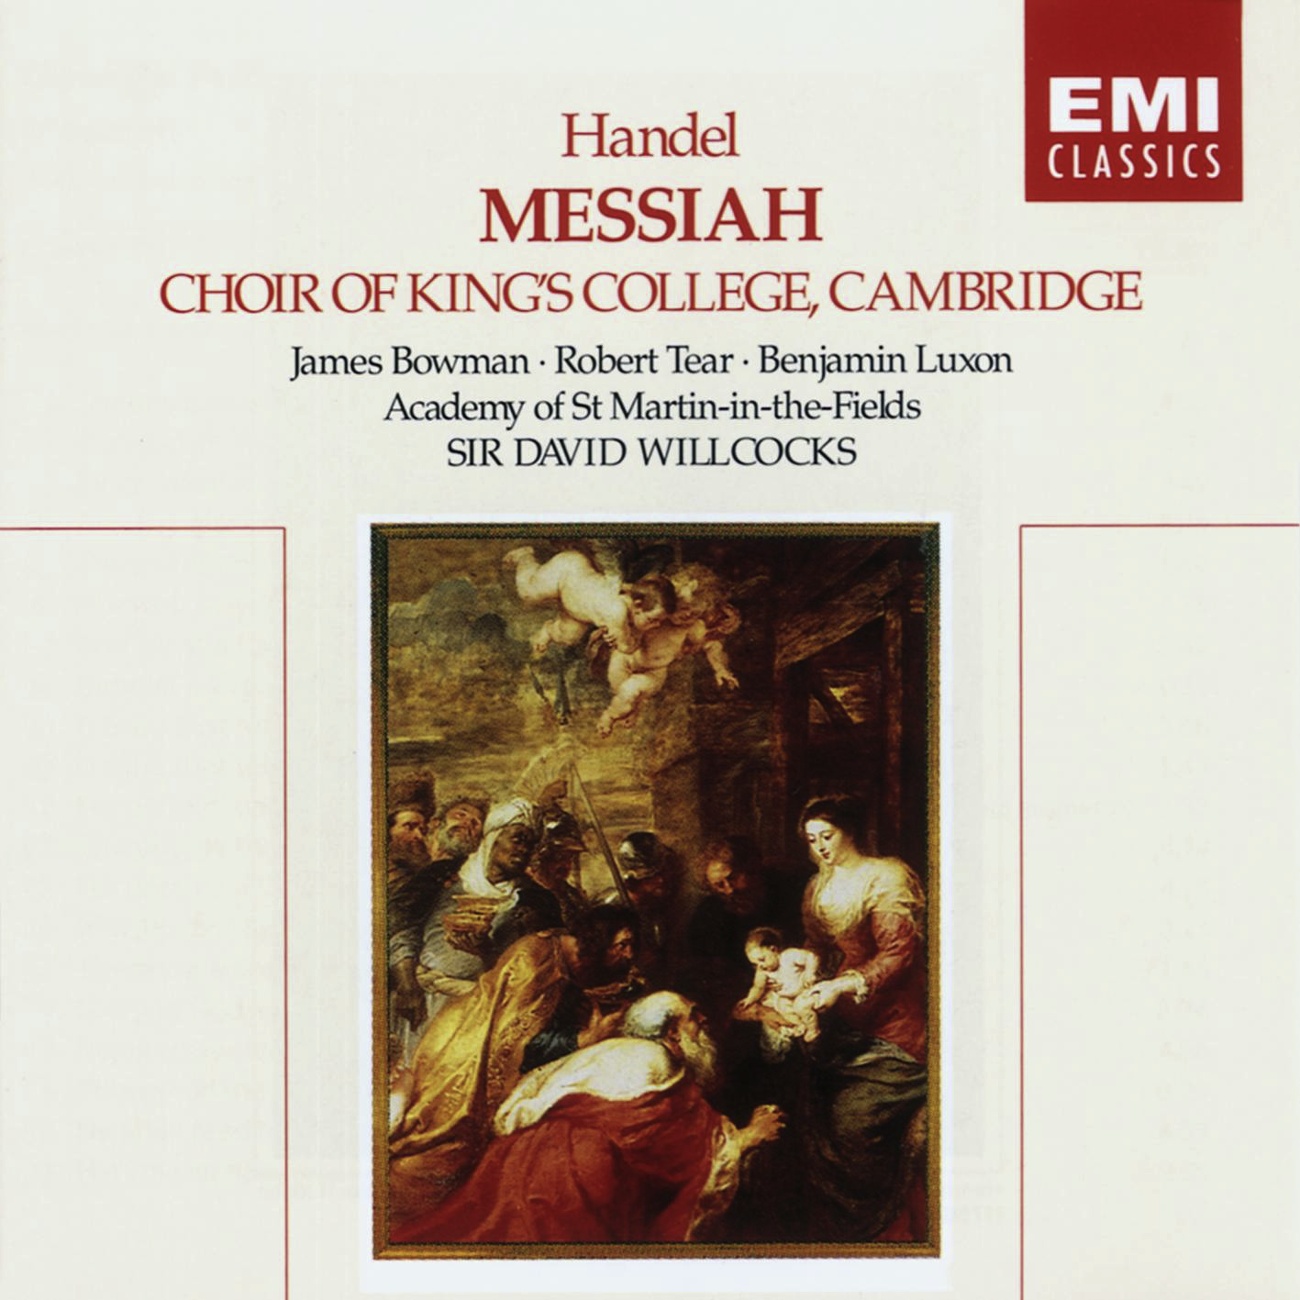 Messiah HWV56 (1992 Digital Remaster), PART 1: He shall feed his flock ... Come unto Him all ye that labour (soprano & alto duet: Larghetto e piano)